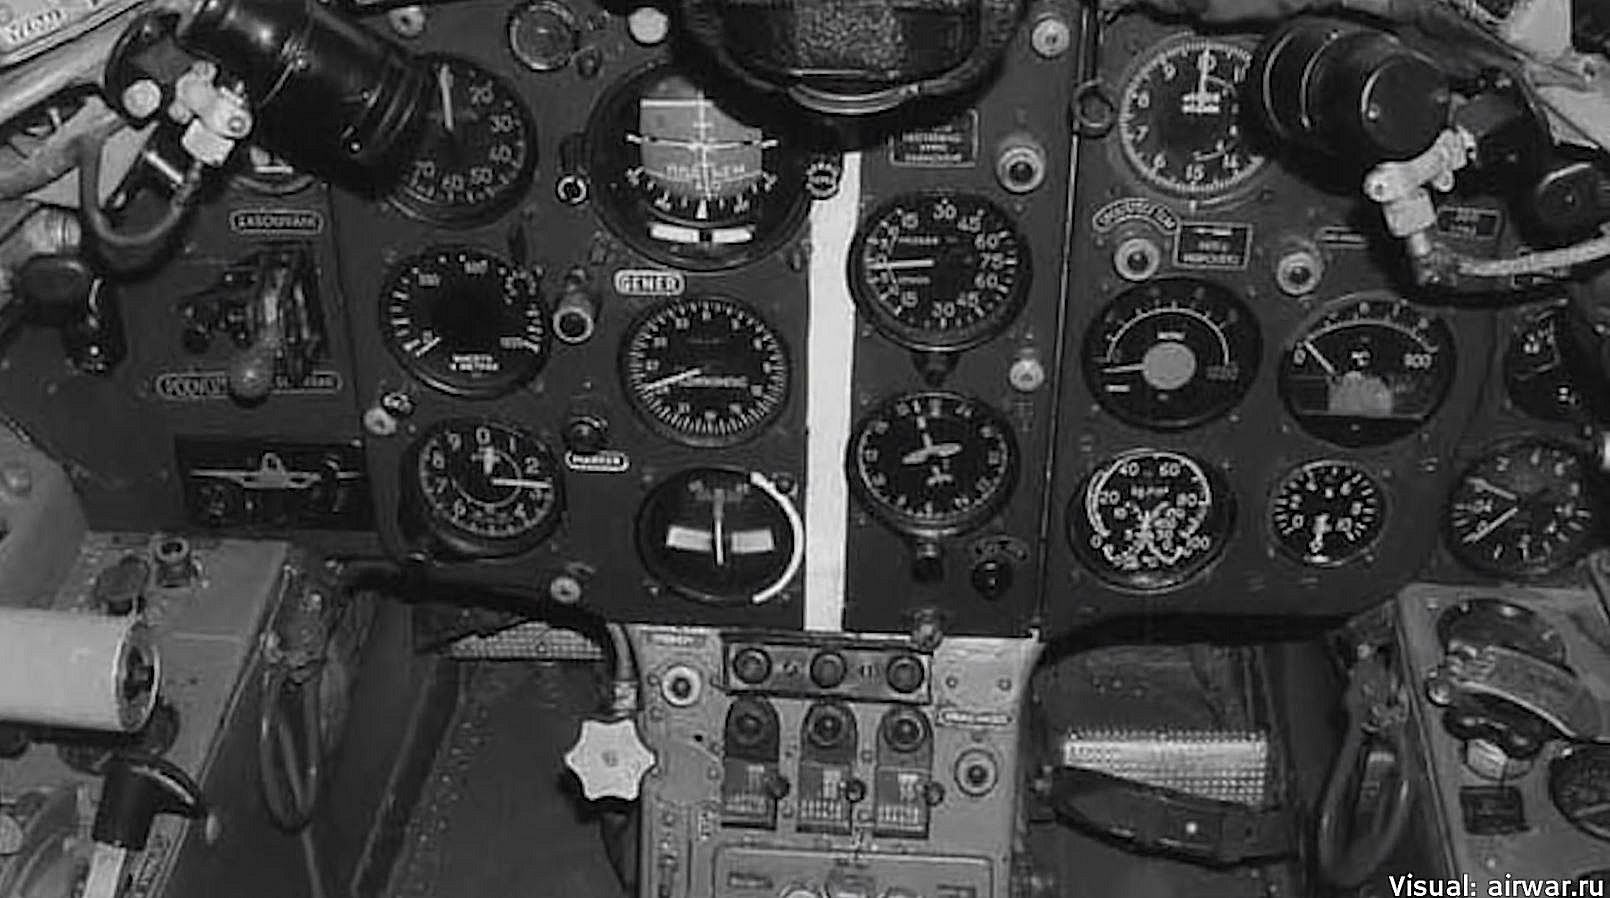 Inside The Cockpit - Mikoyan-Gurevich MiG-15